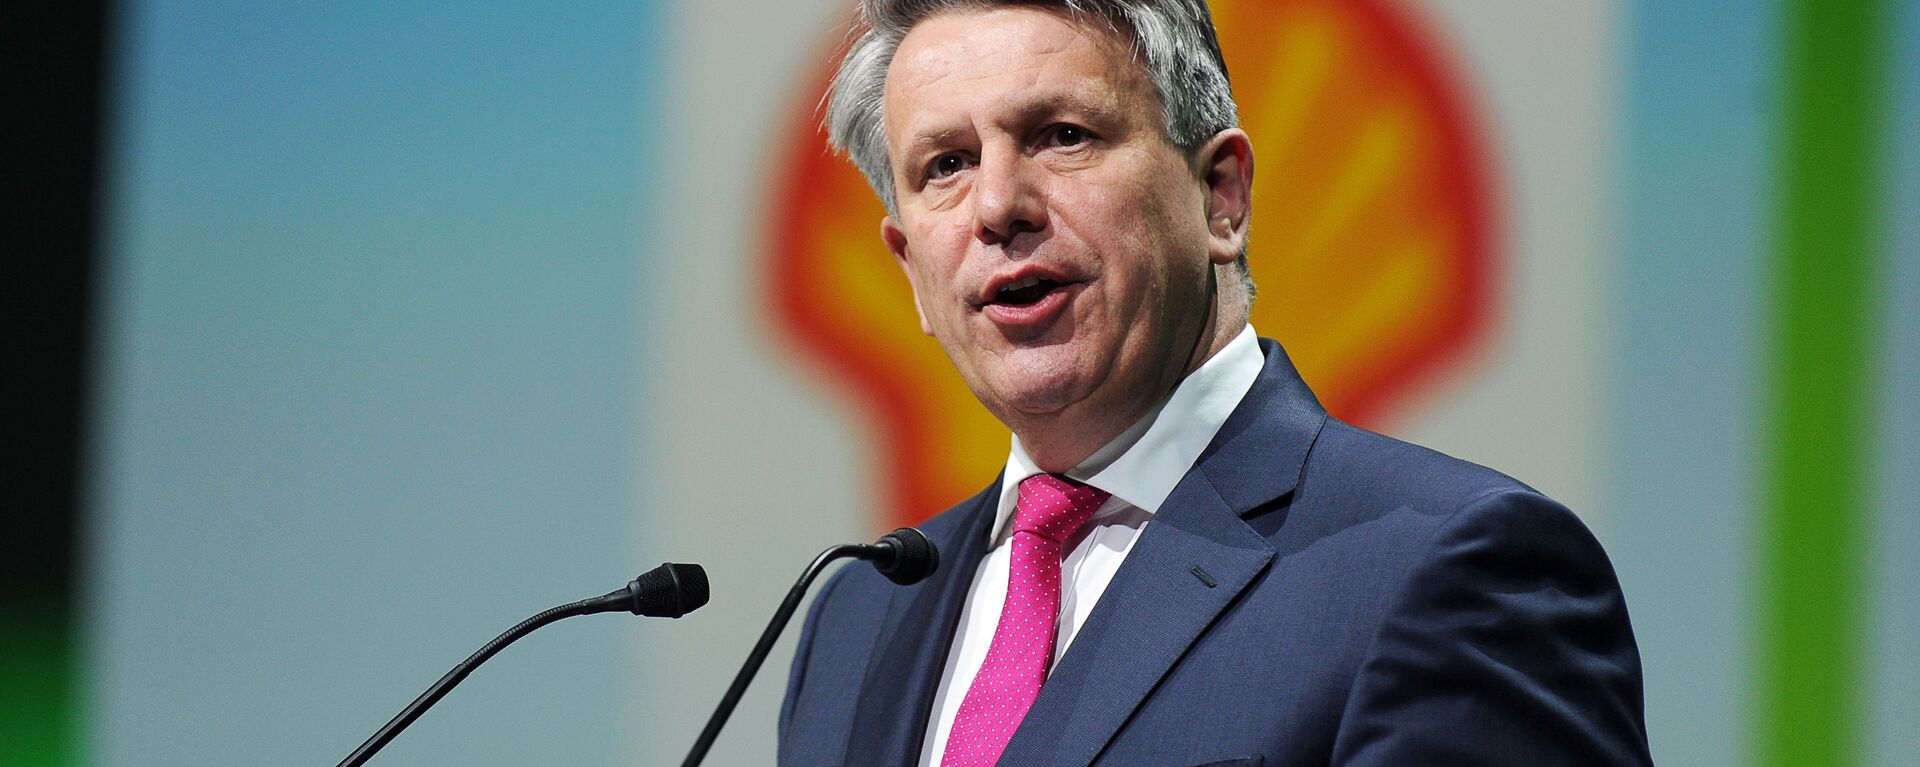 Royal Dutch Shell CEO Ben Van Beurden addresses a keynote speech during the World Gas Conference in Paris on June 2, 2015 - Sputnik International, 1920, 15.07.2022